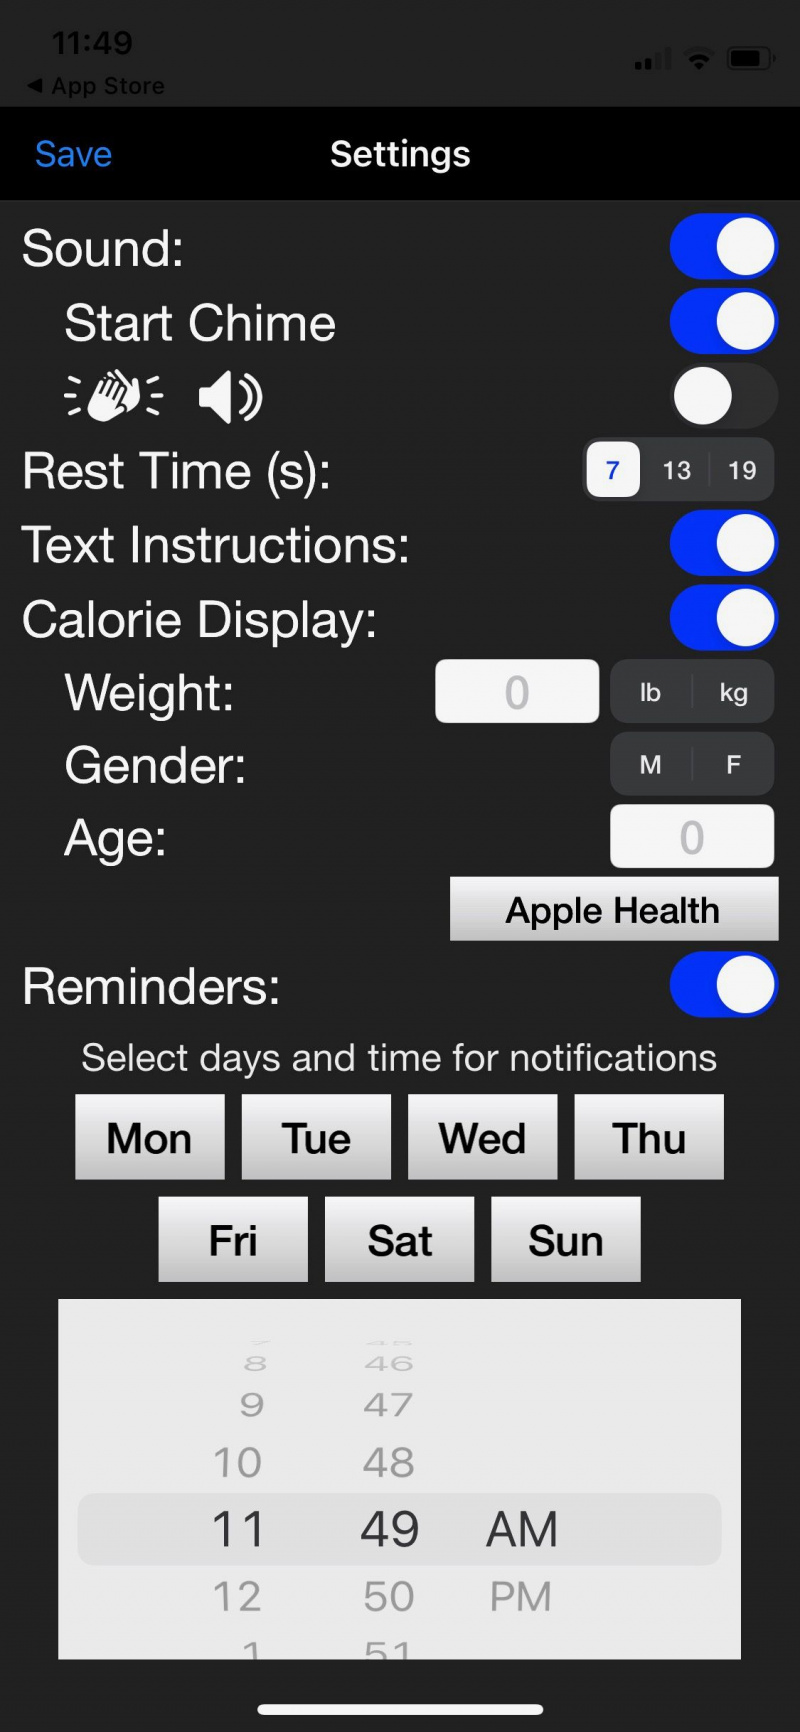   Tangkapan layar dari perut harian yang menunjukkan pengaturan aplikasi